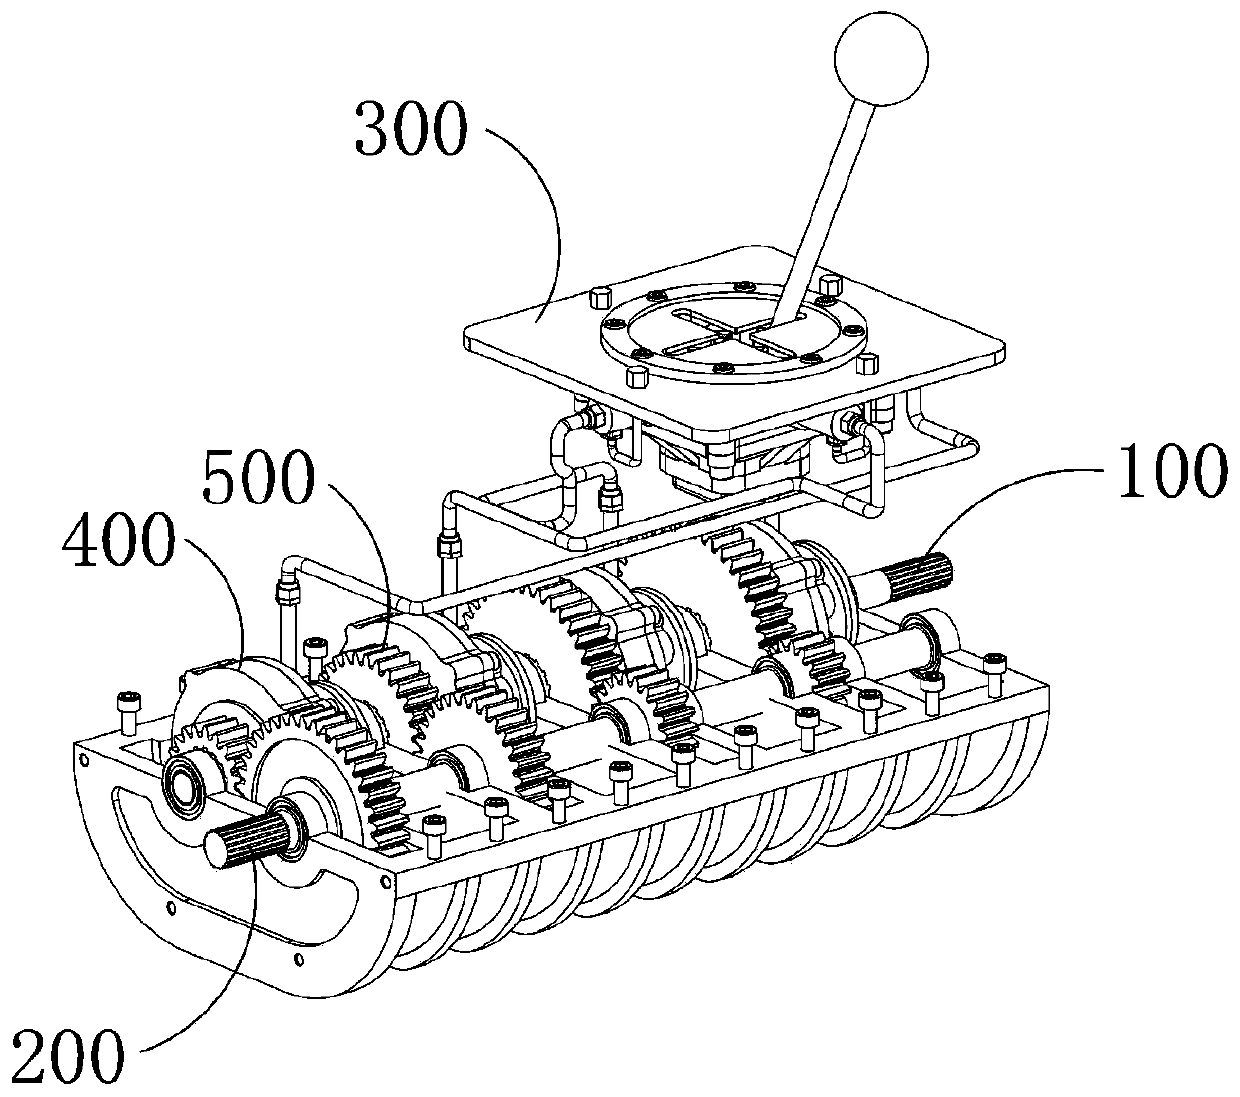 Automobile gearbox adopting clutch hydraulic shifting method